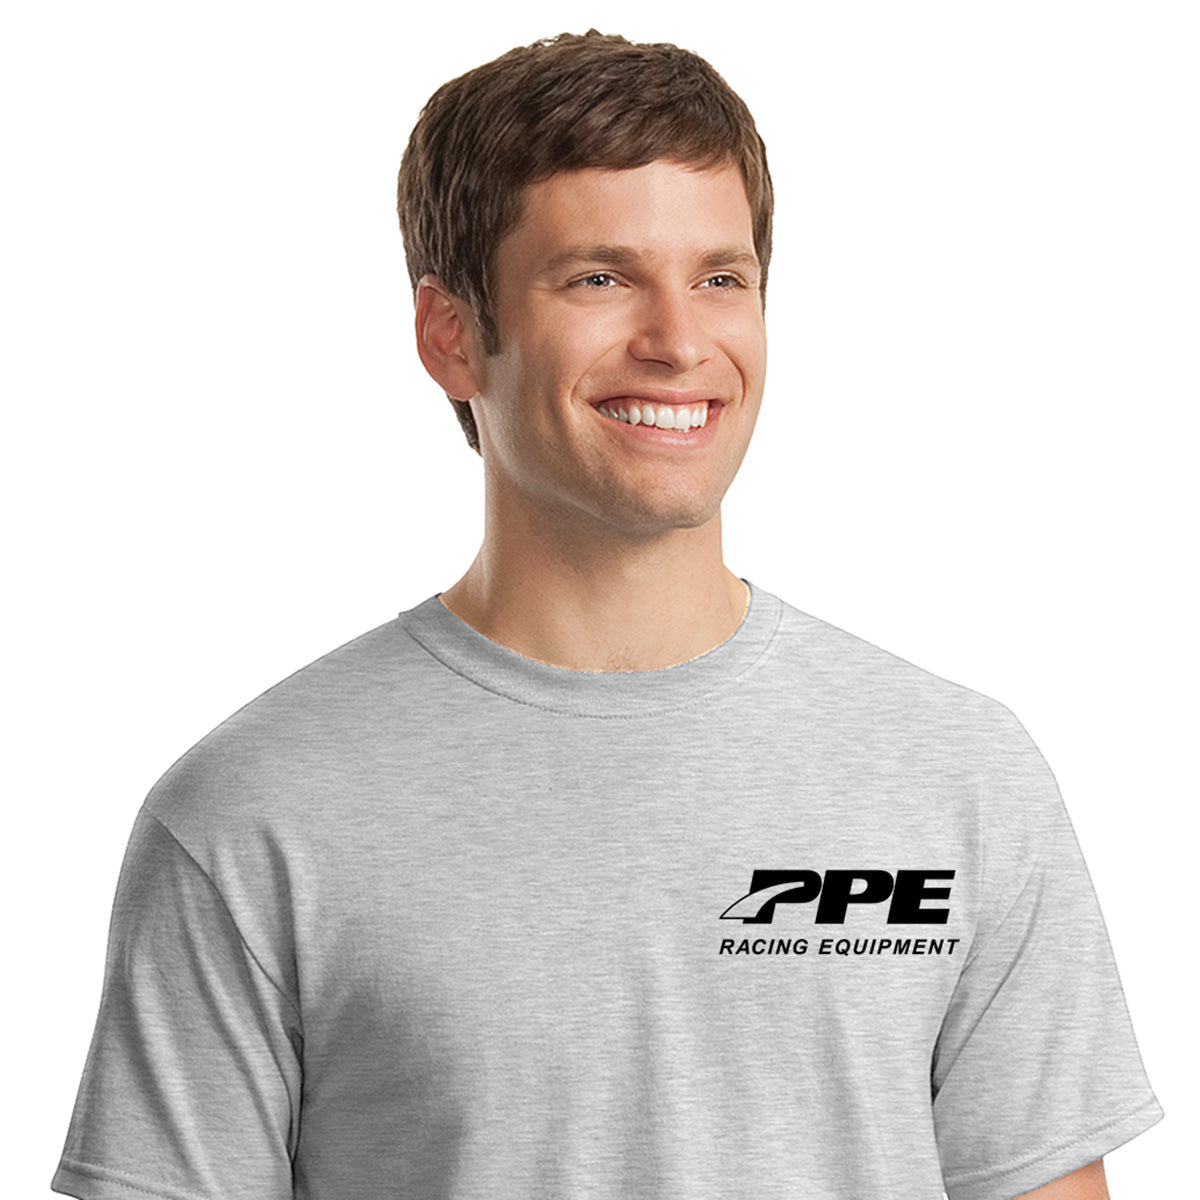 PPE Diesel Ash Gray T-Shirt X-Large